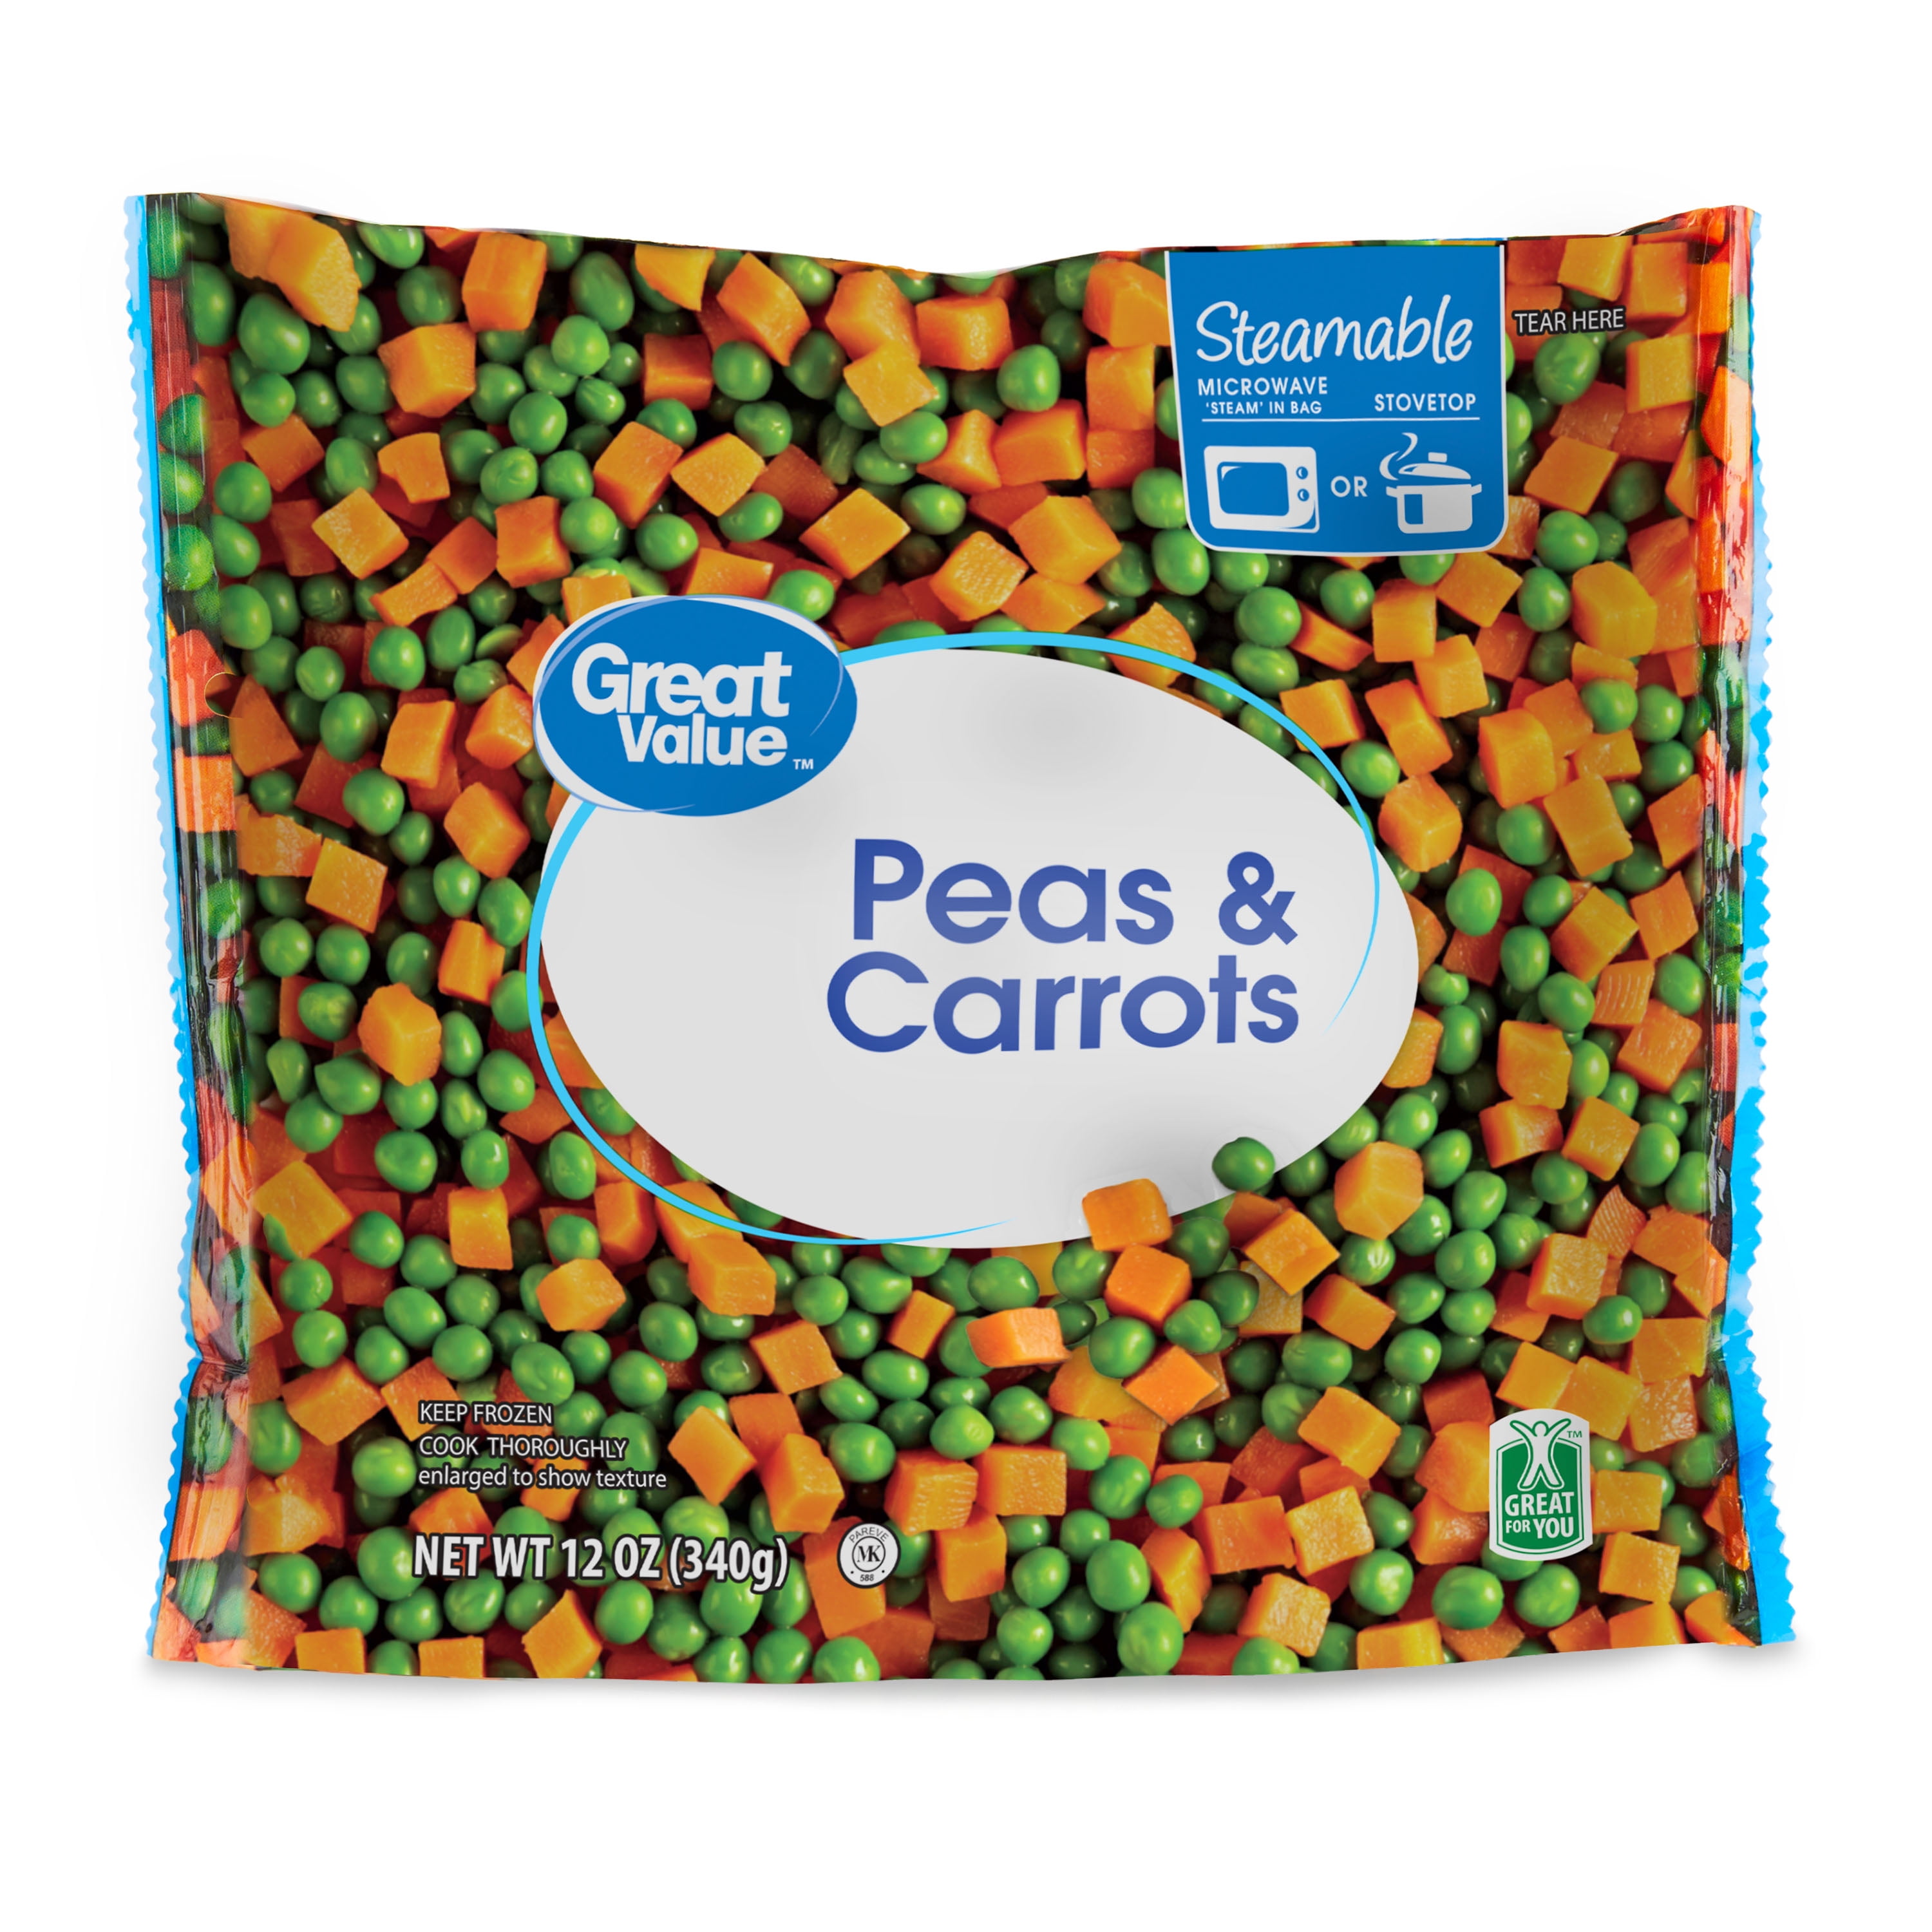 Great Value Frozen Peas & Carrots, 12 oz Steamable Bag